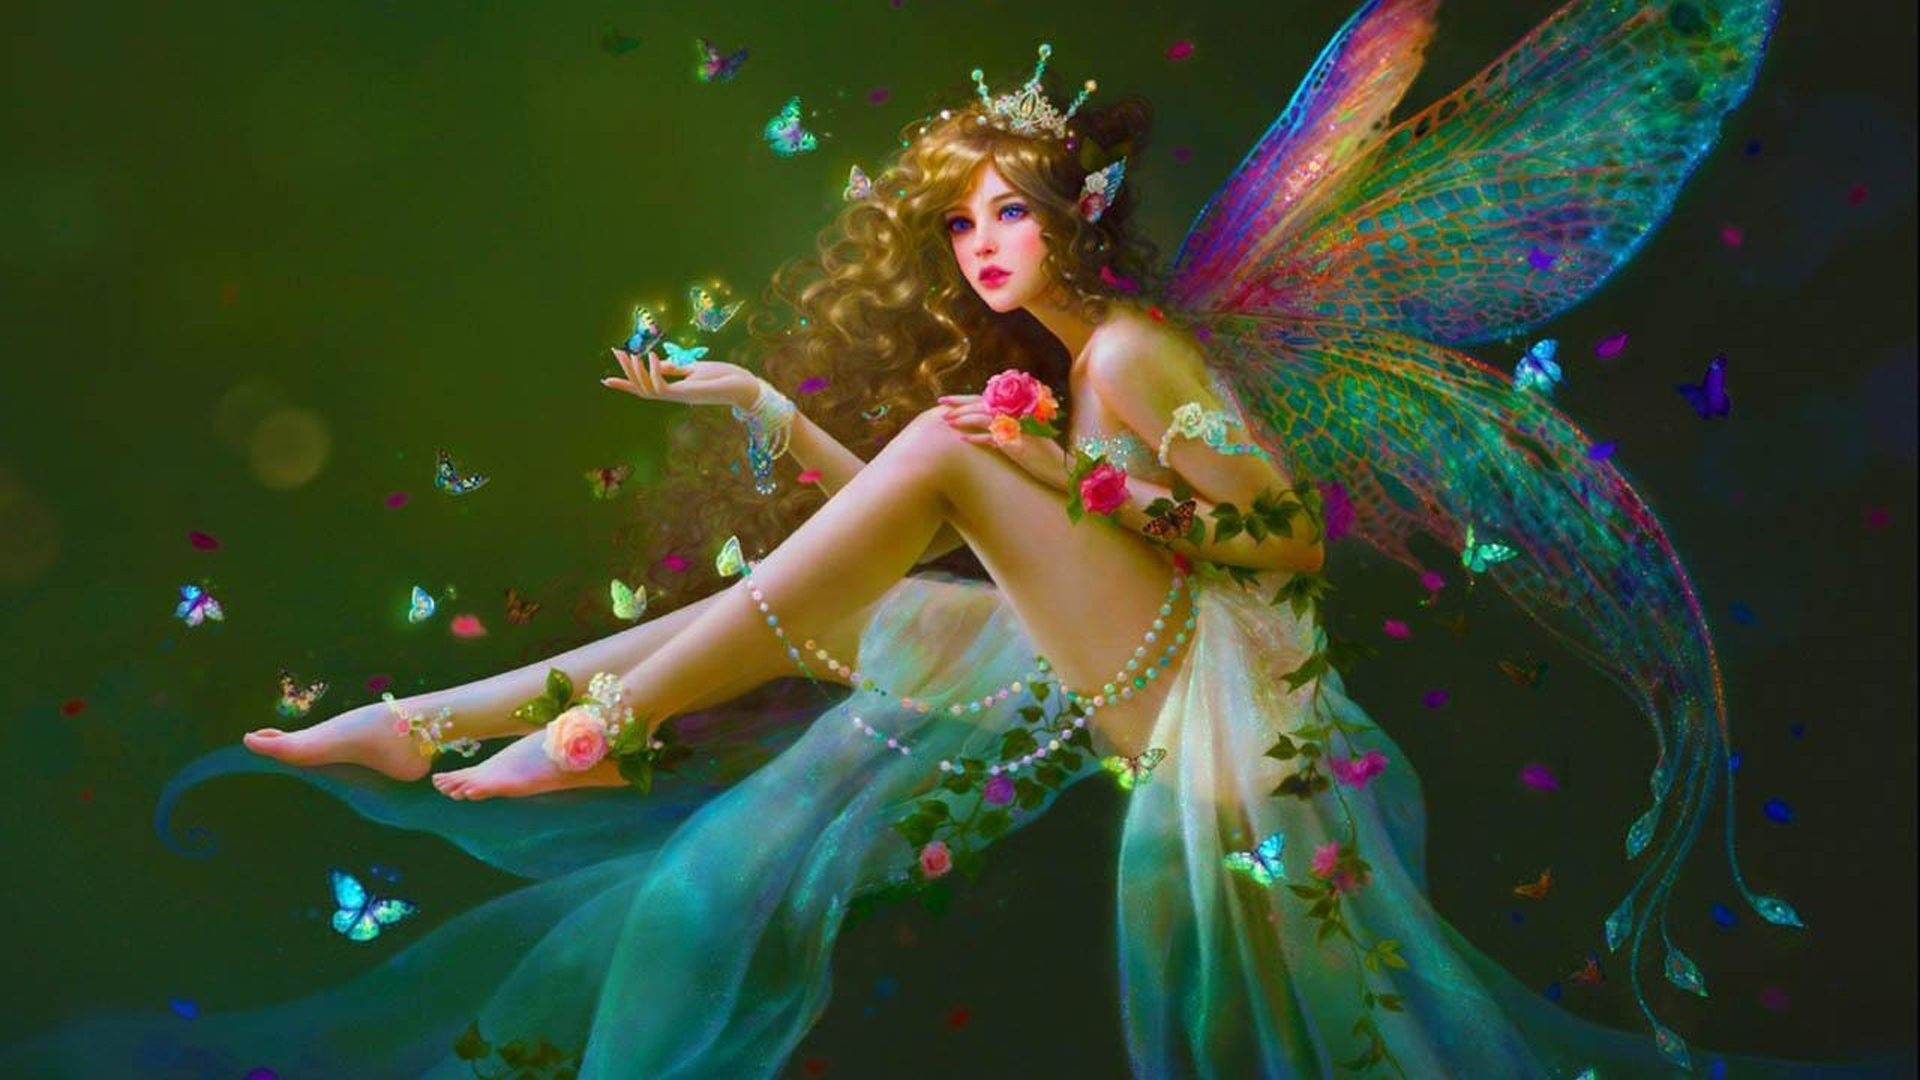 HD fairy wallpapers, High resolution fairy backgrounds, Fairy art, Fairy fantasy illustrations, 1920x1080 Full HD Desktop